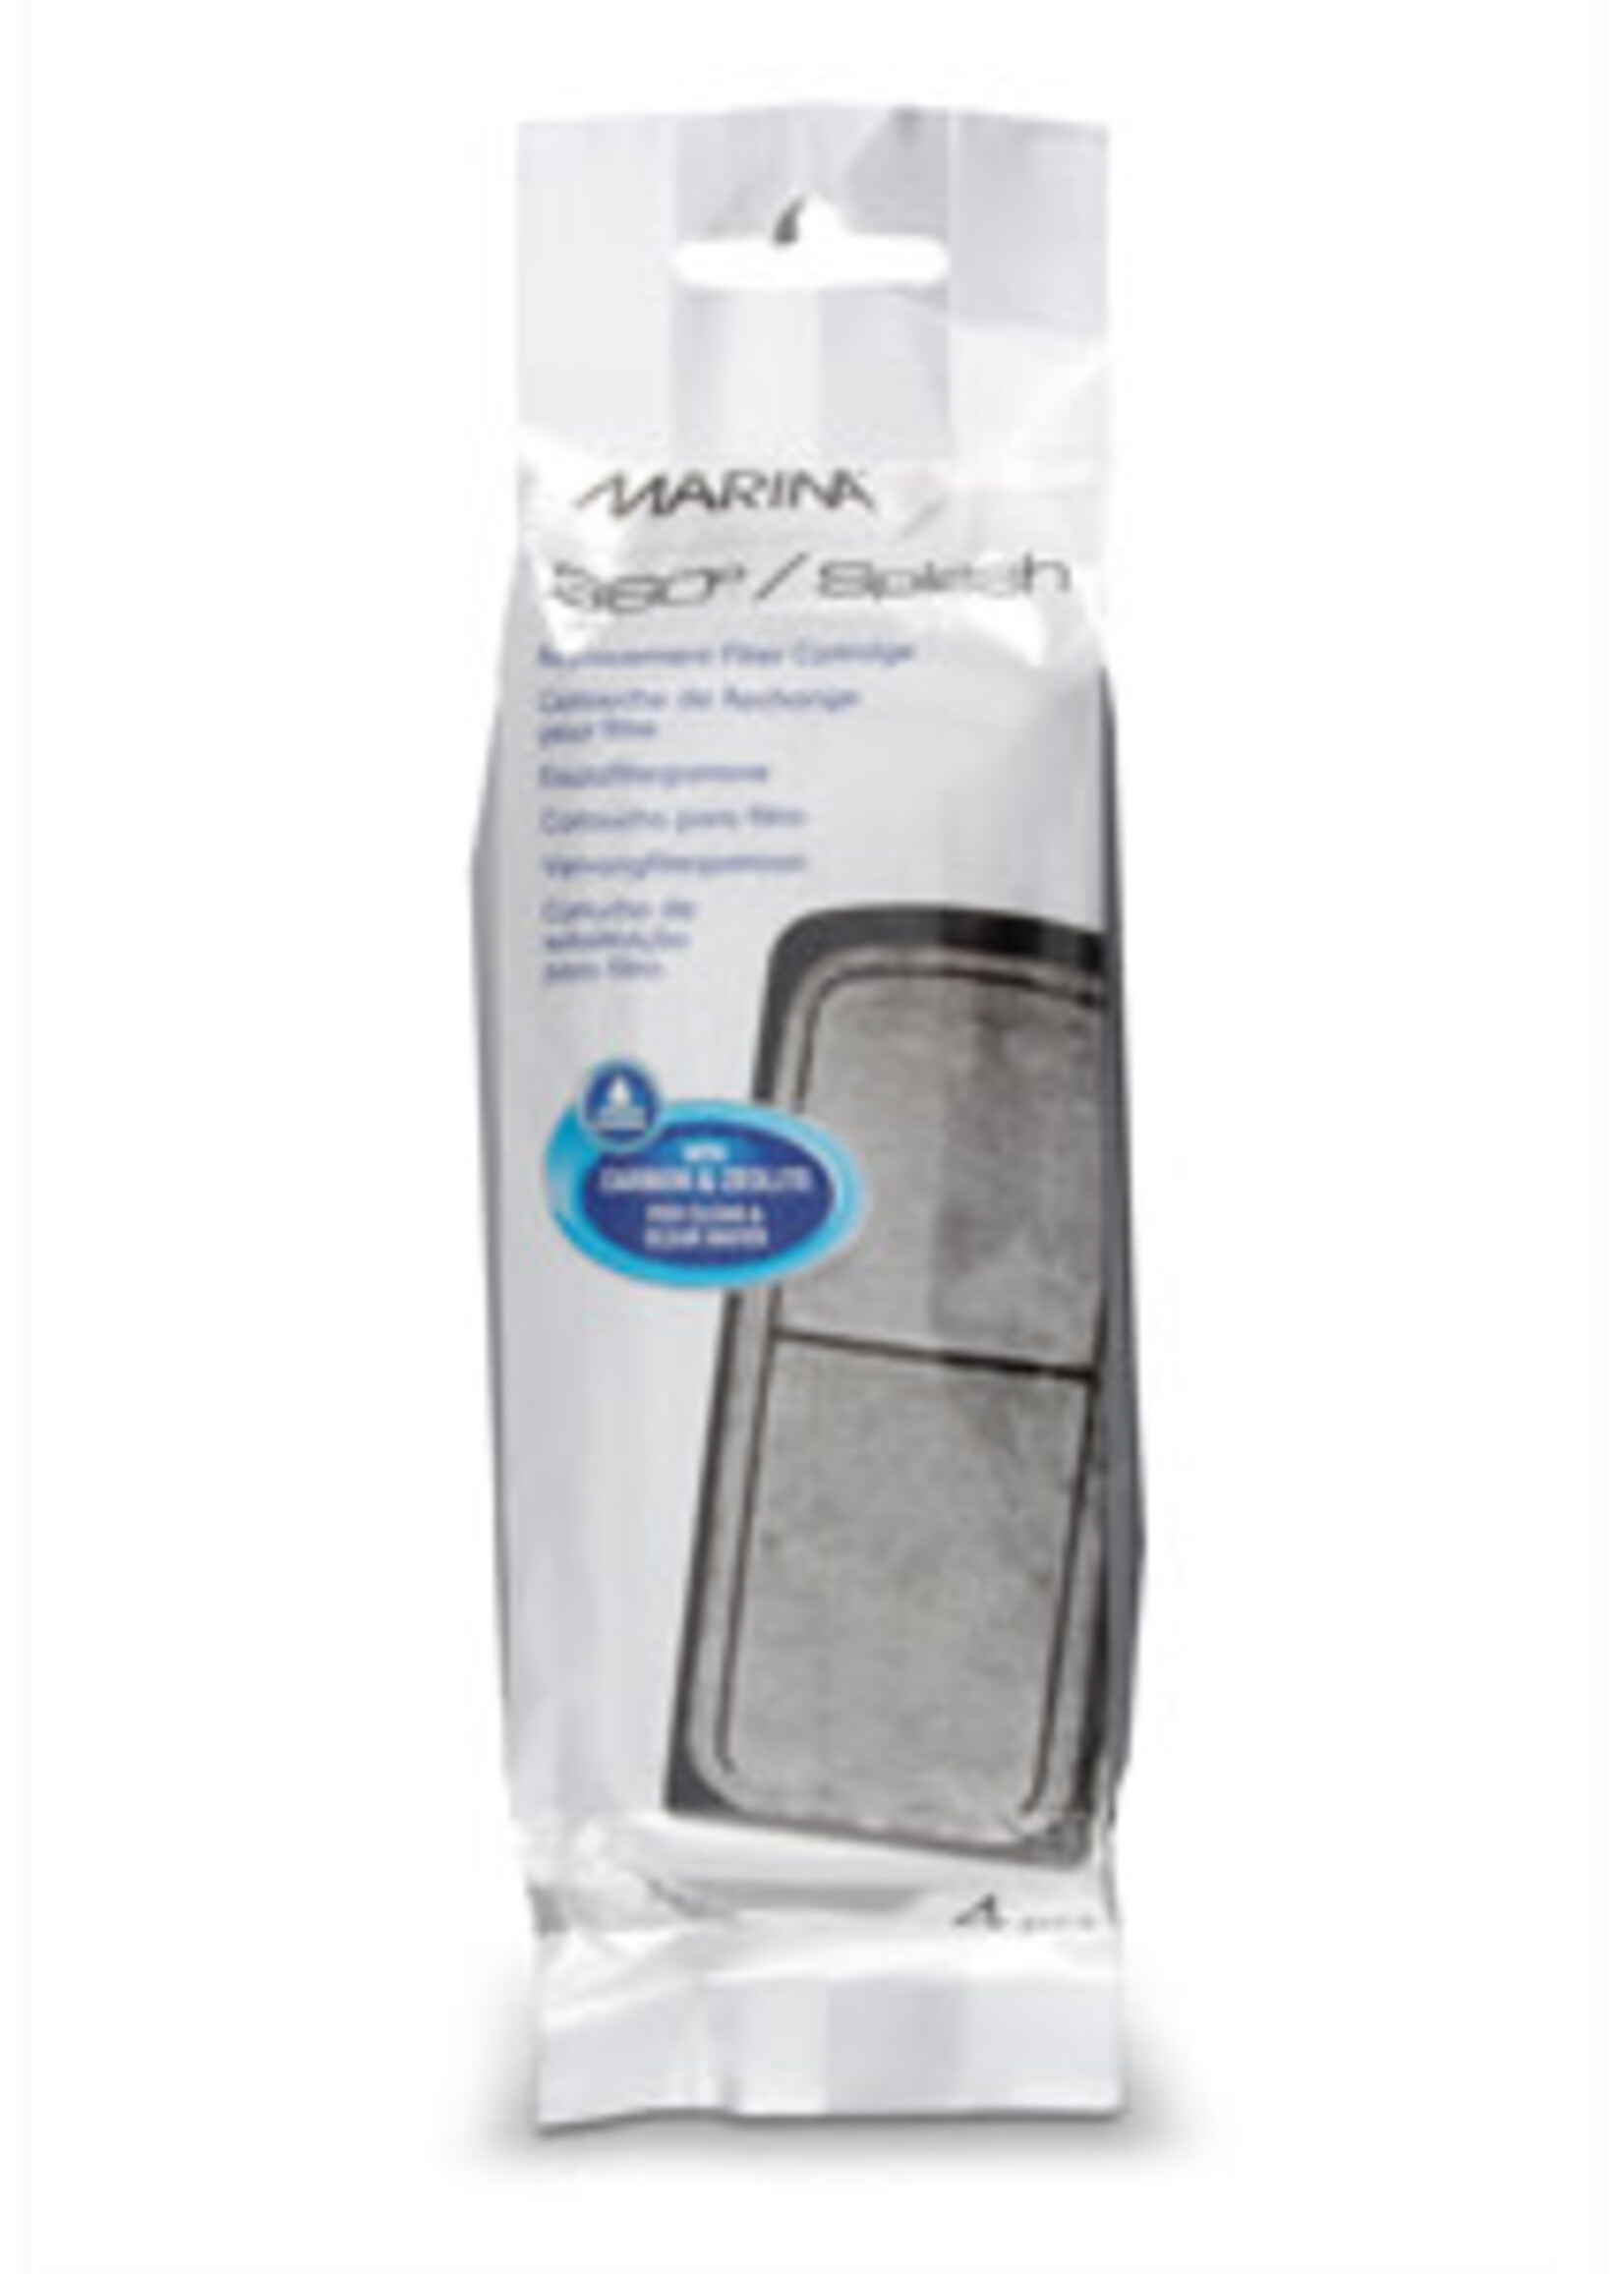 Marina 360/Marina Splash Replacement Filter Cartridge - 4 pack